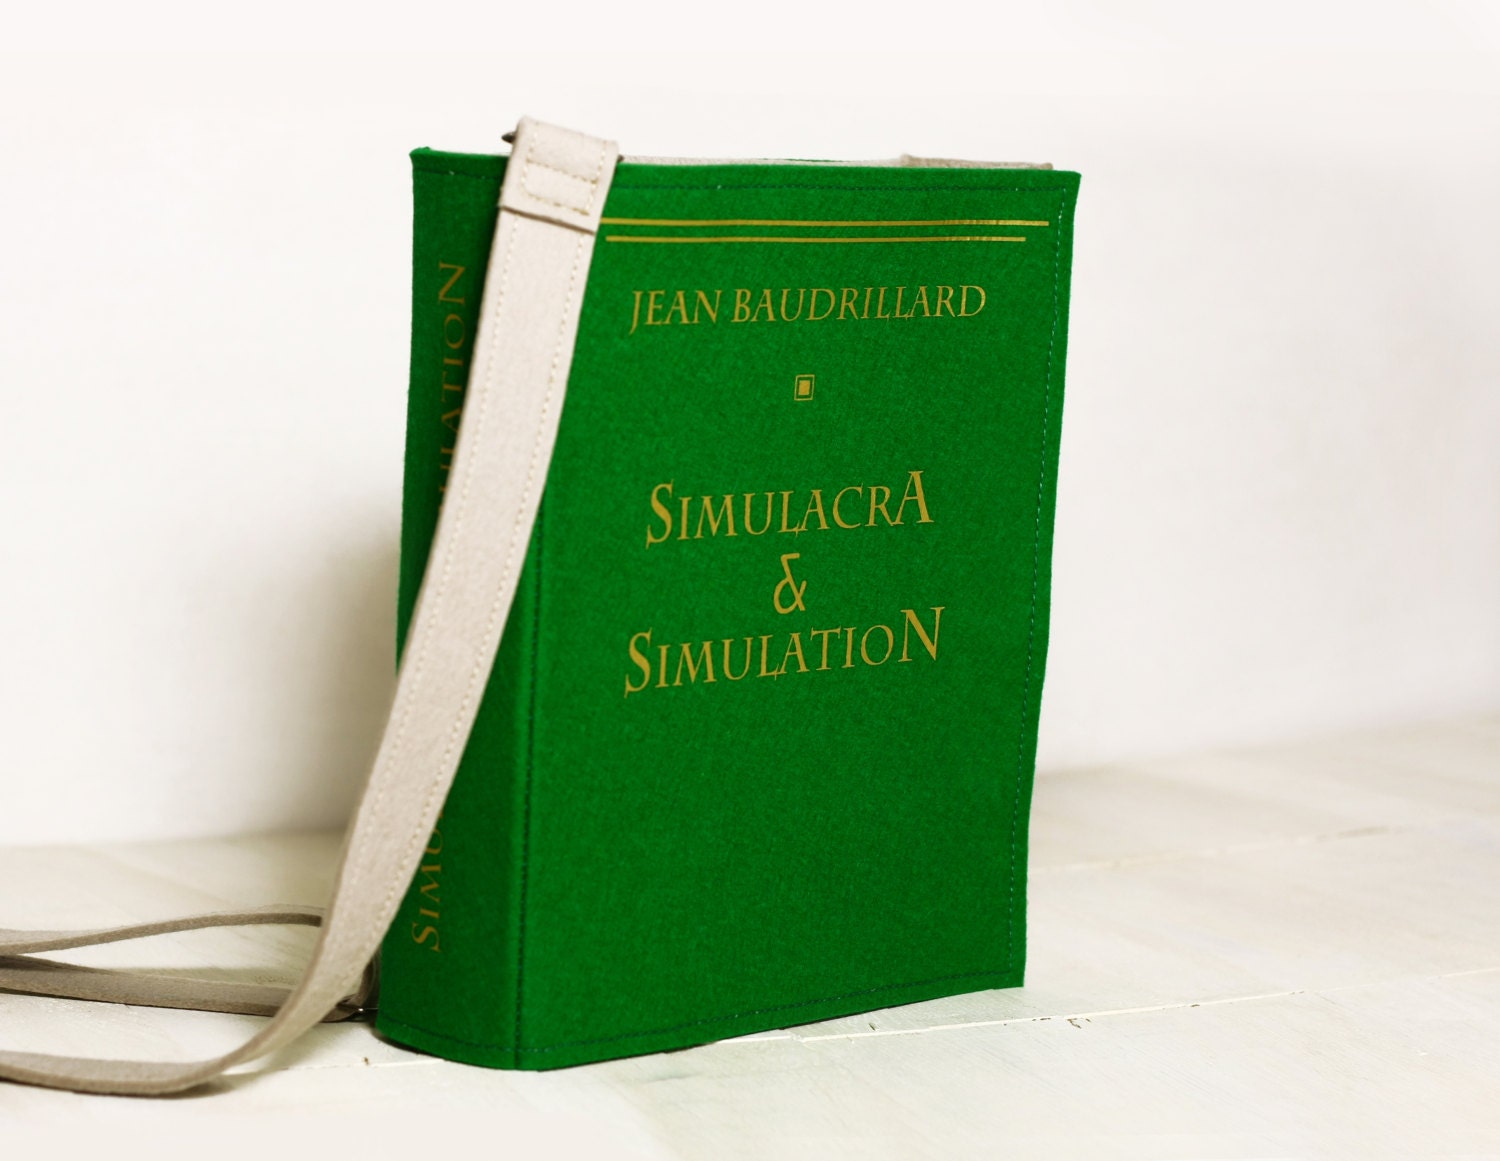 Симулякры и симуляции книга. Зеленая обложка книги. Jean Baudrillard Simulacra and Simulation. Simulacra Simulation книга.